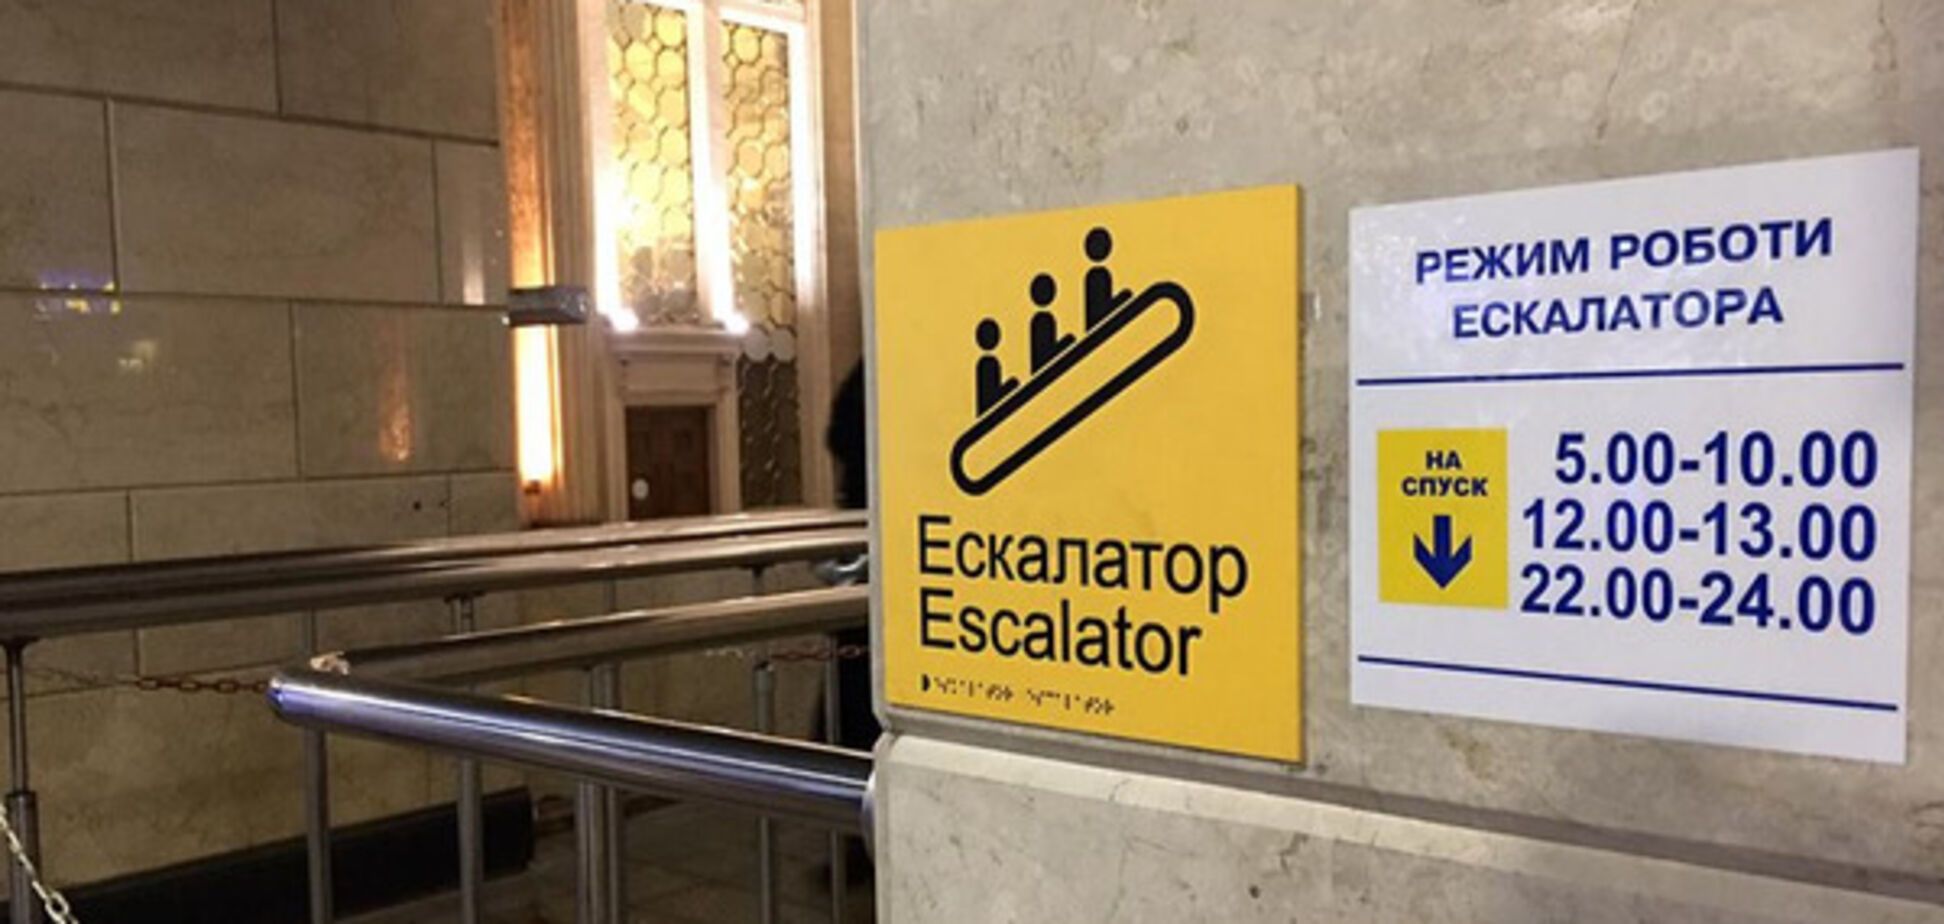 Ескалатор на київському залізничному вокзалі